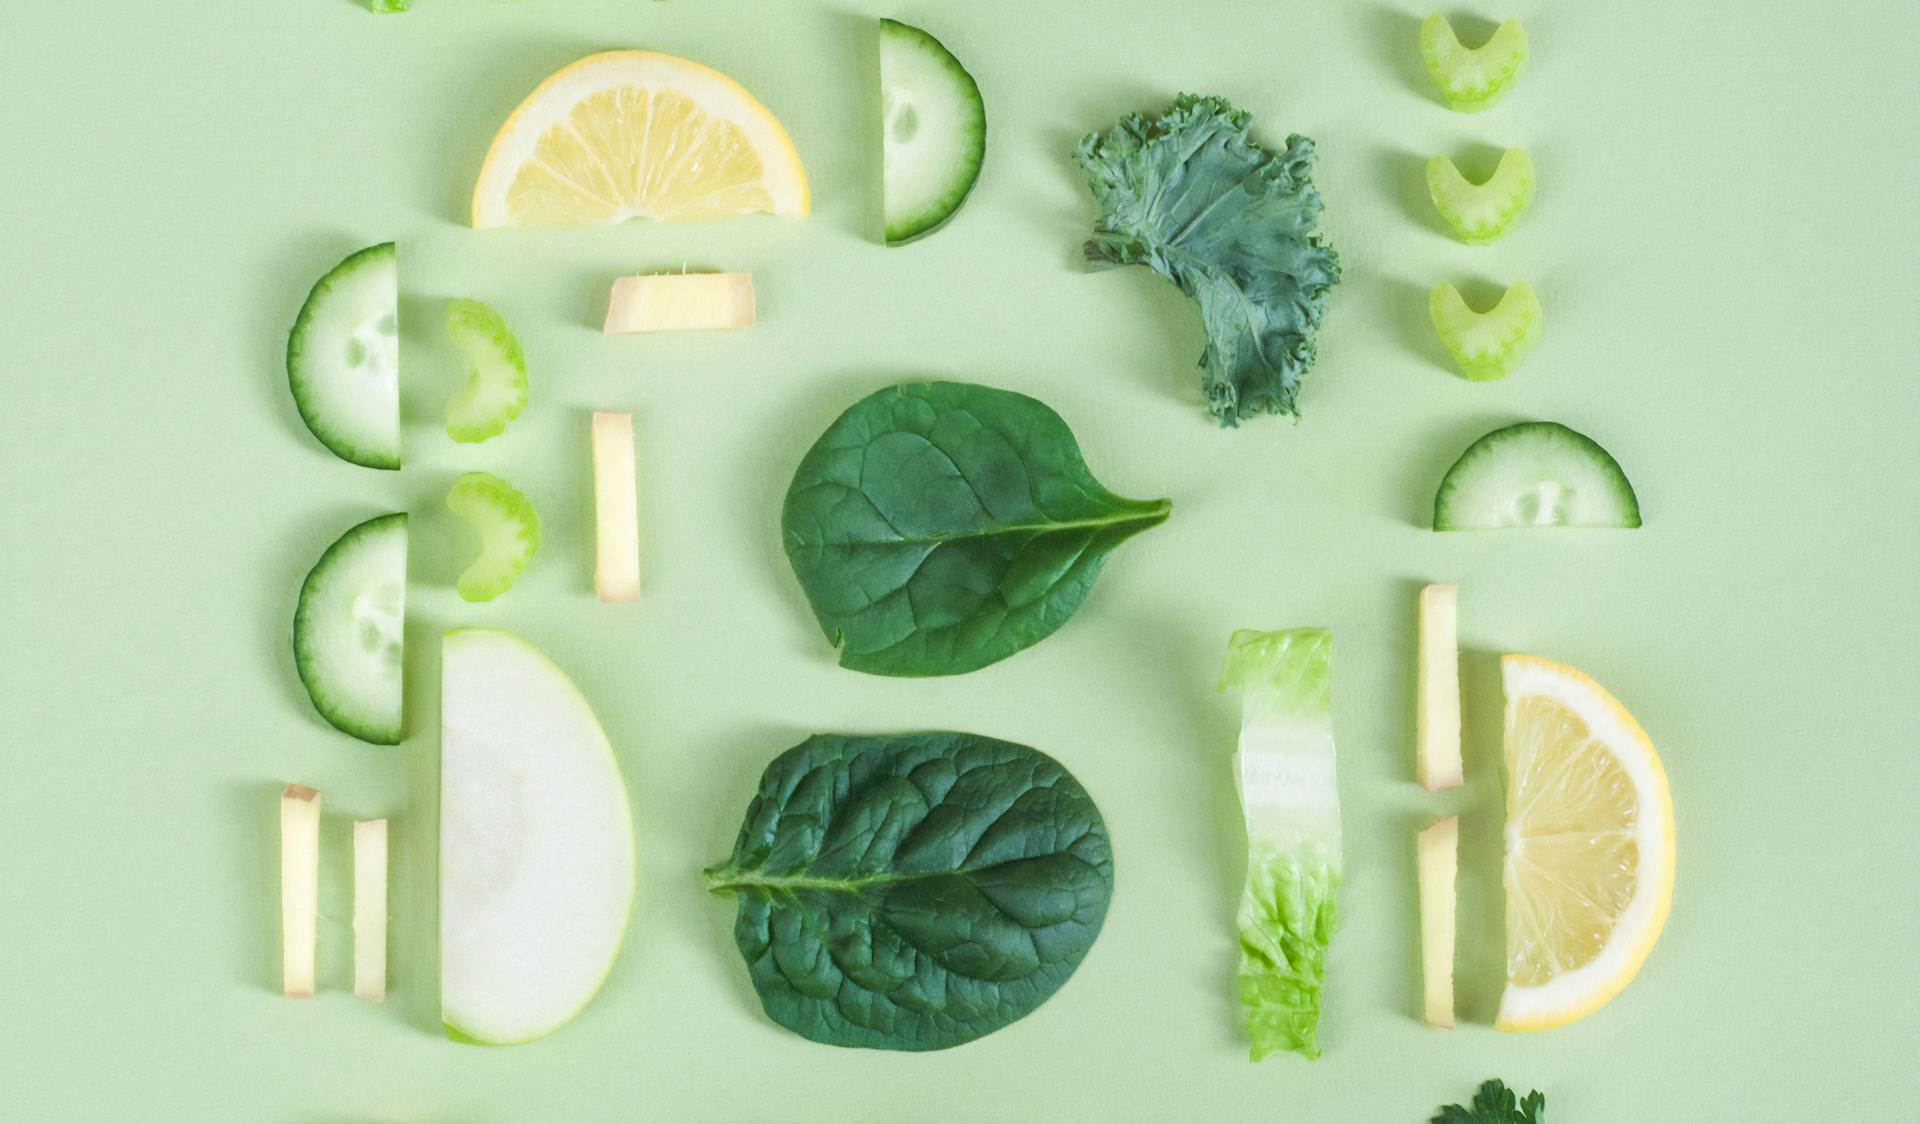 Green vegetables arranged in pattern